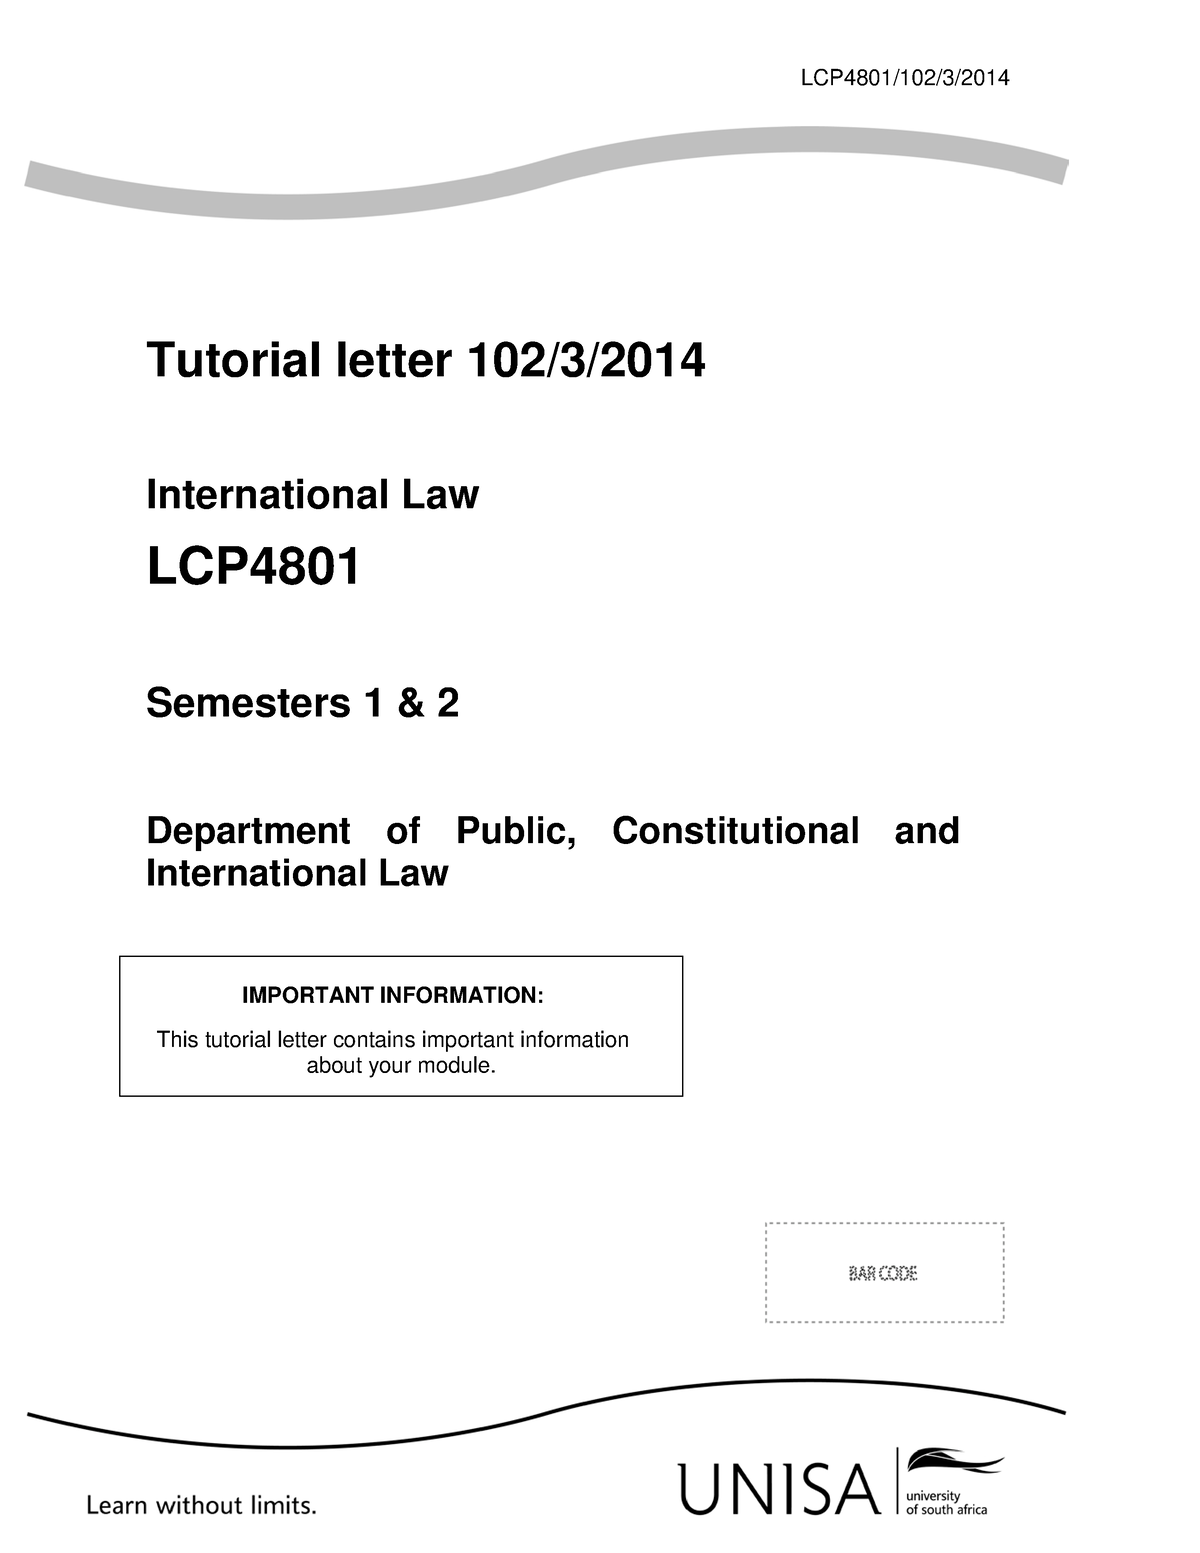 dissertation international law